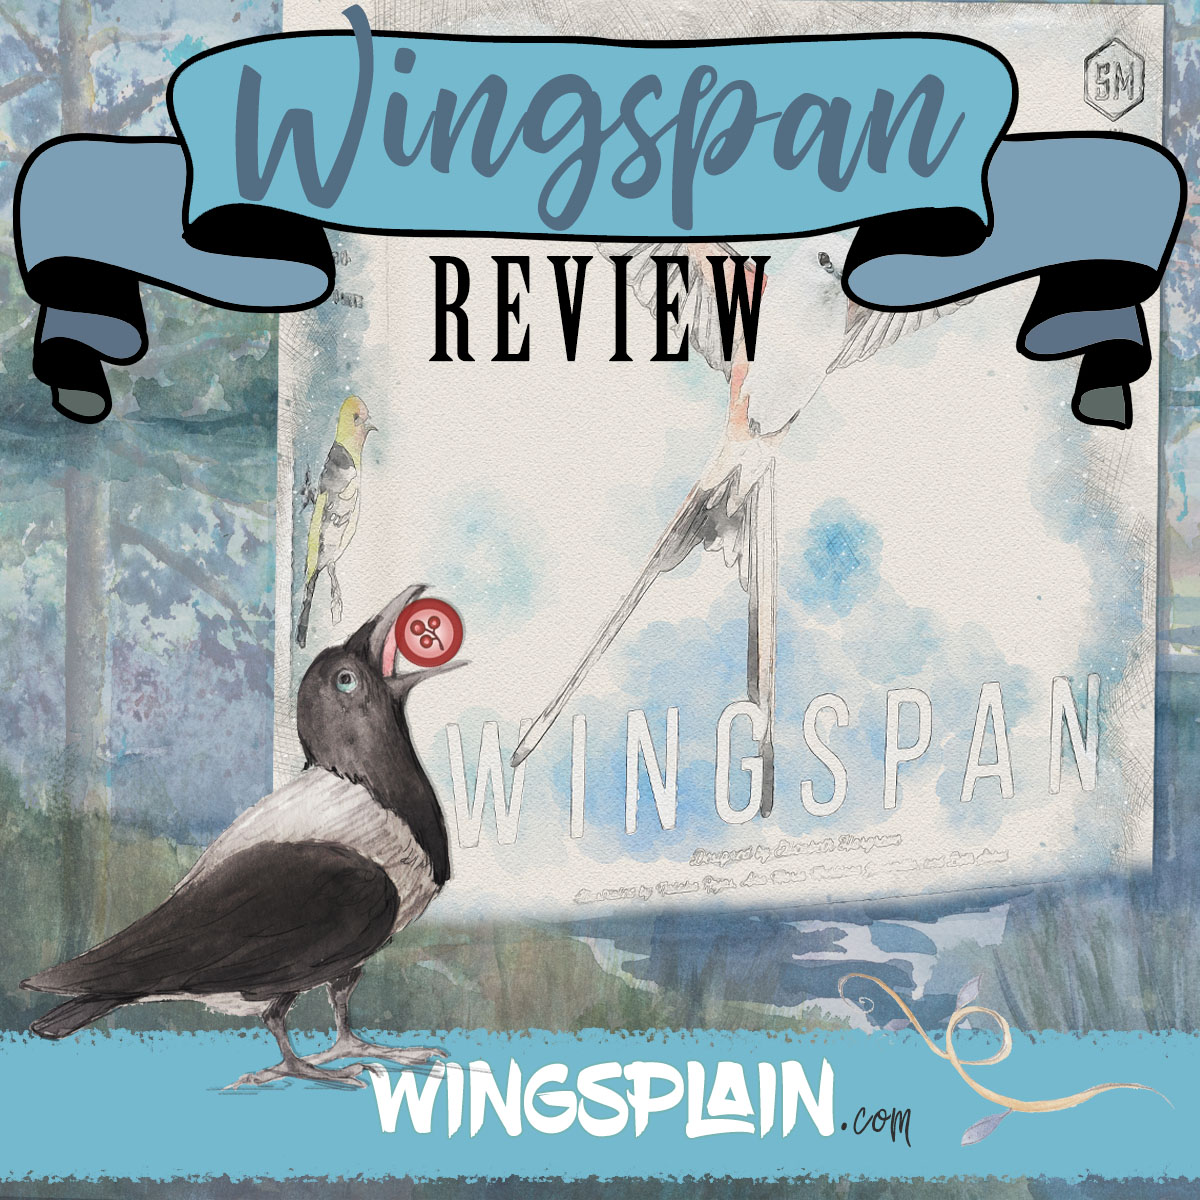 Wingspan: European Expansion (Saturday Review) - Tabletop Games Blog